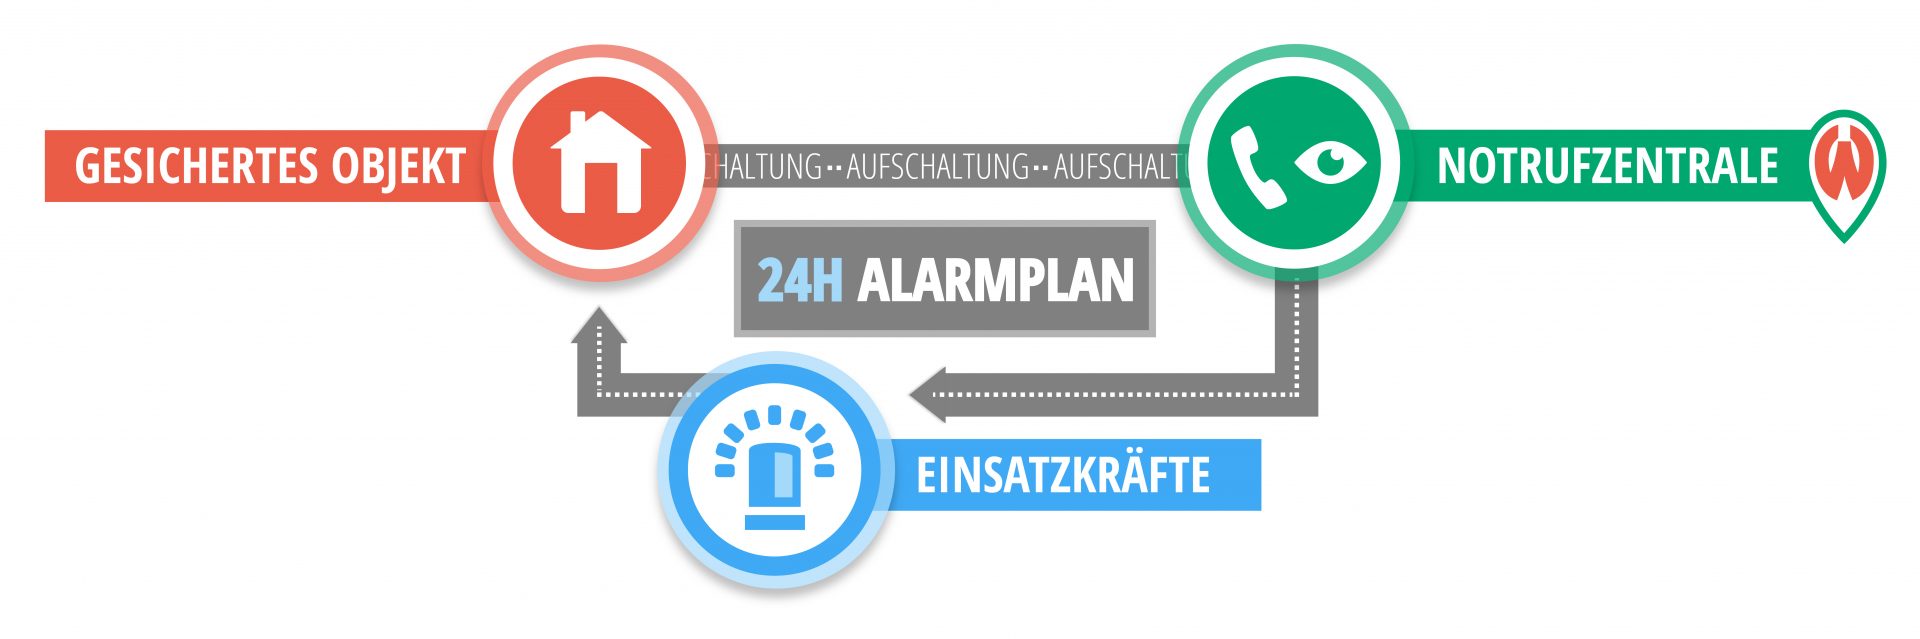 Alarm aufschaltung infografik - Stiller Alarm